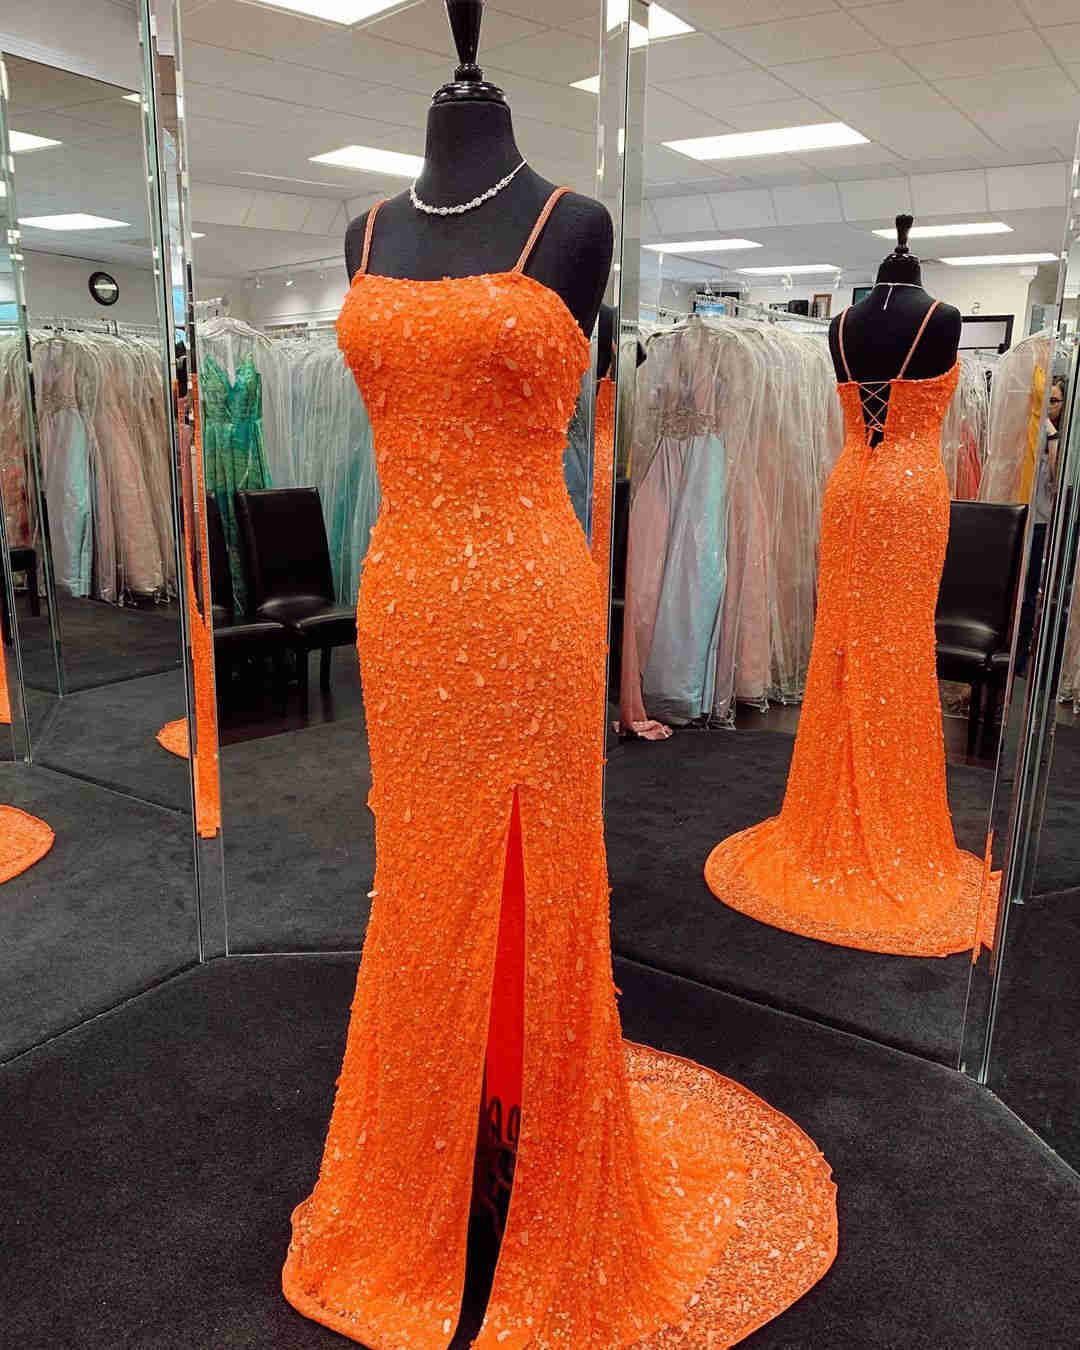 Mermaid Sequined Orange Prom Dress with Slit?Mermaid Sequined Orange Prom Dress with Slit?long dress,cheap dress,evening dress,bridal dress,prom dress 2021